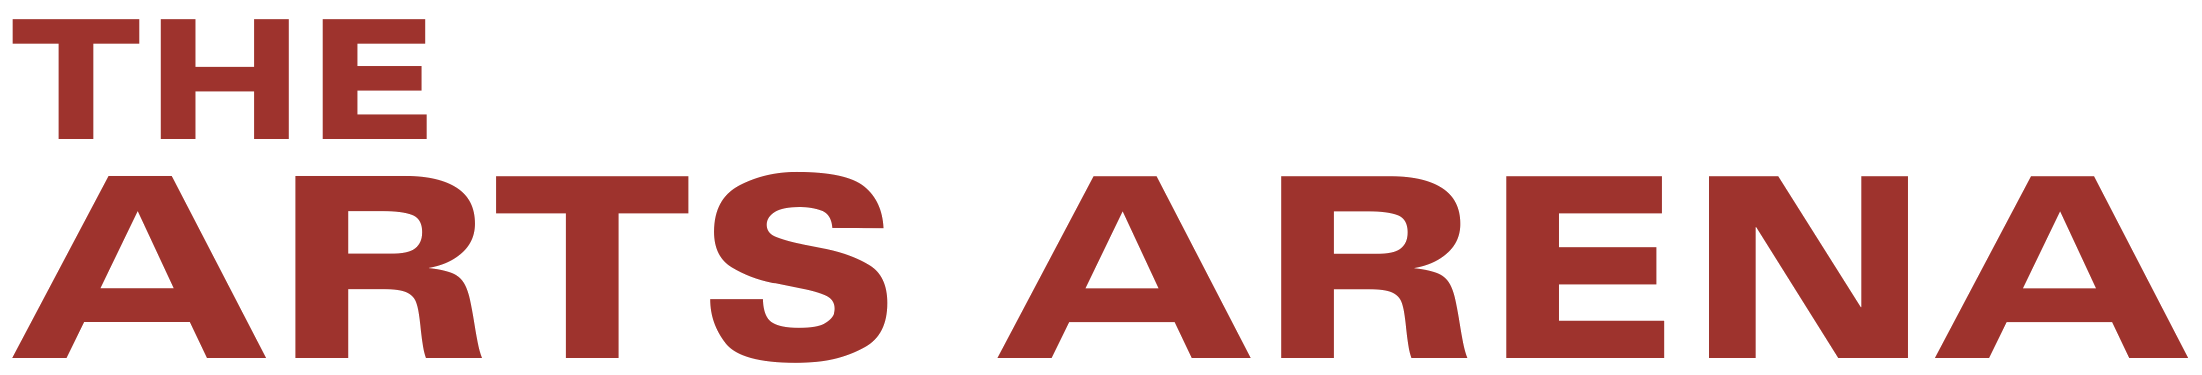 The Arts Arena logo